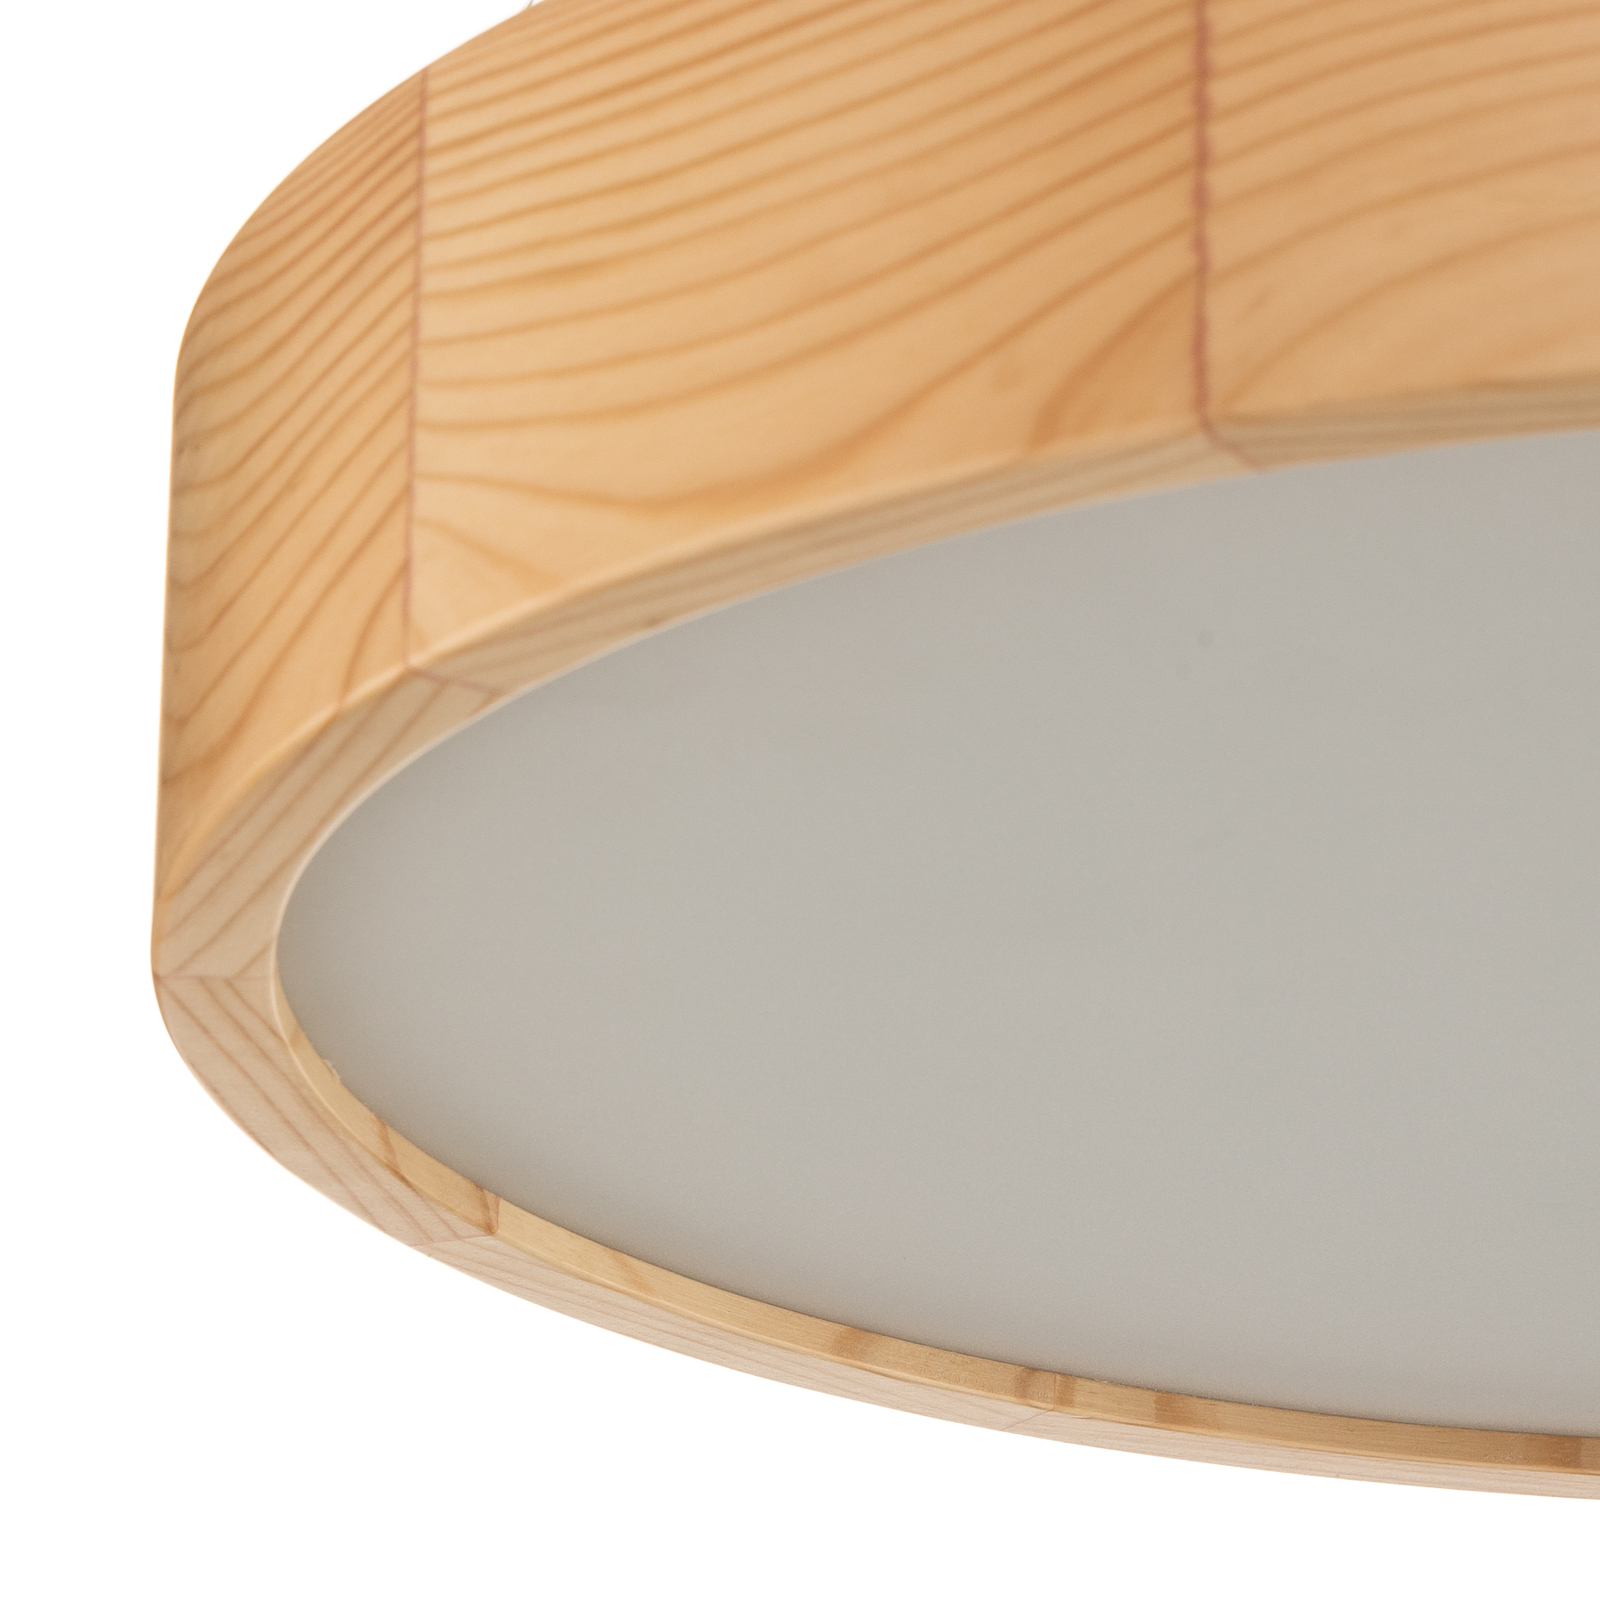 Cleo ceiling light made of pine wood, Ø 47.5 cm